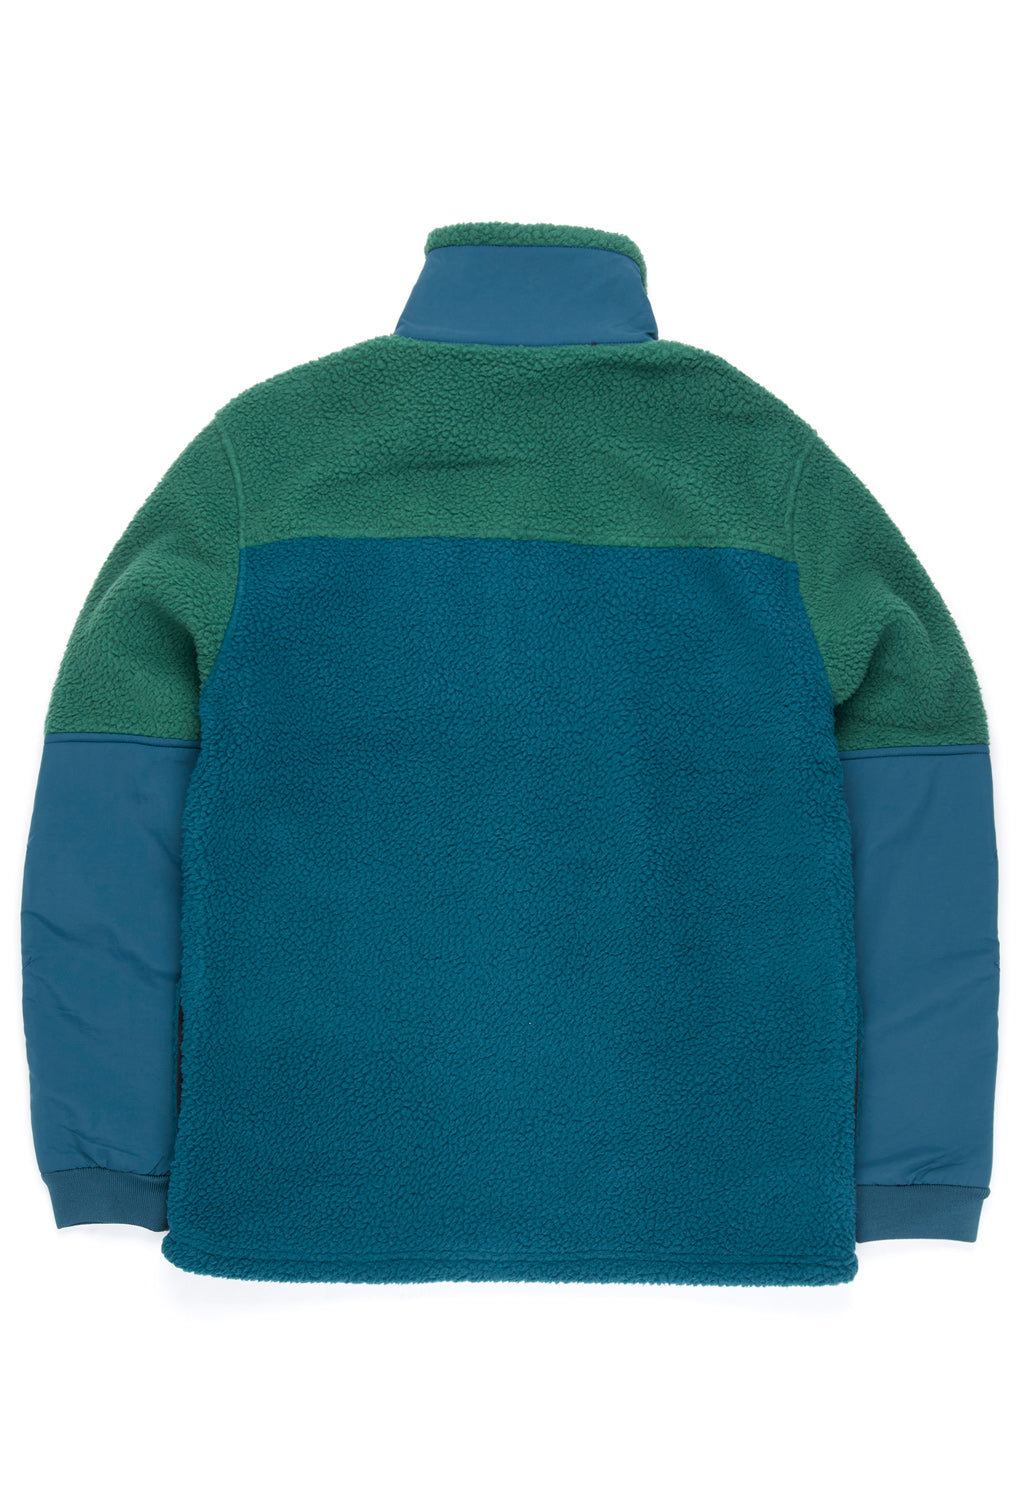 Topo Designs Men's Mountain Fleece Pullover - Forest / Pond Blue